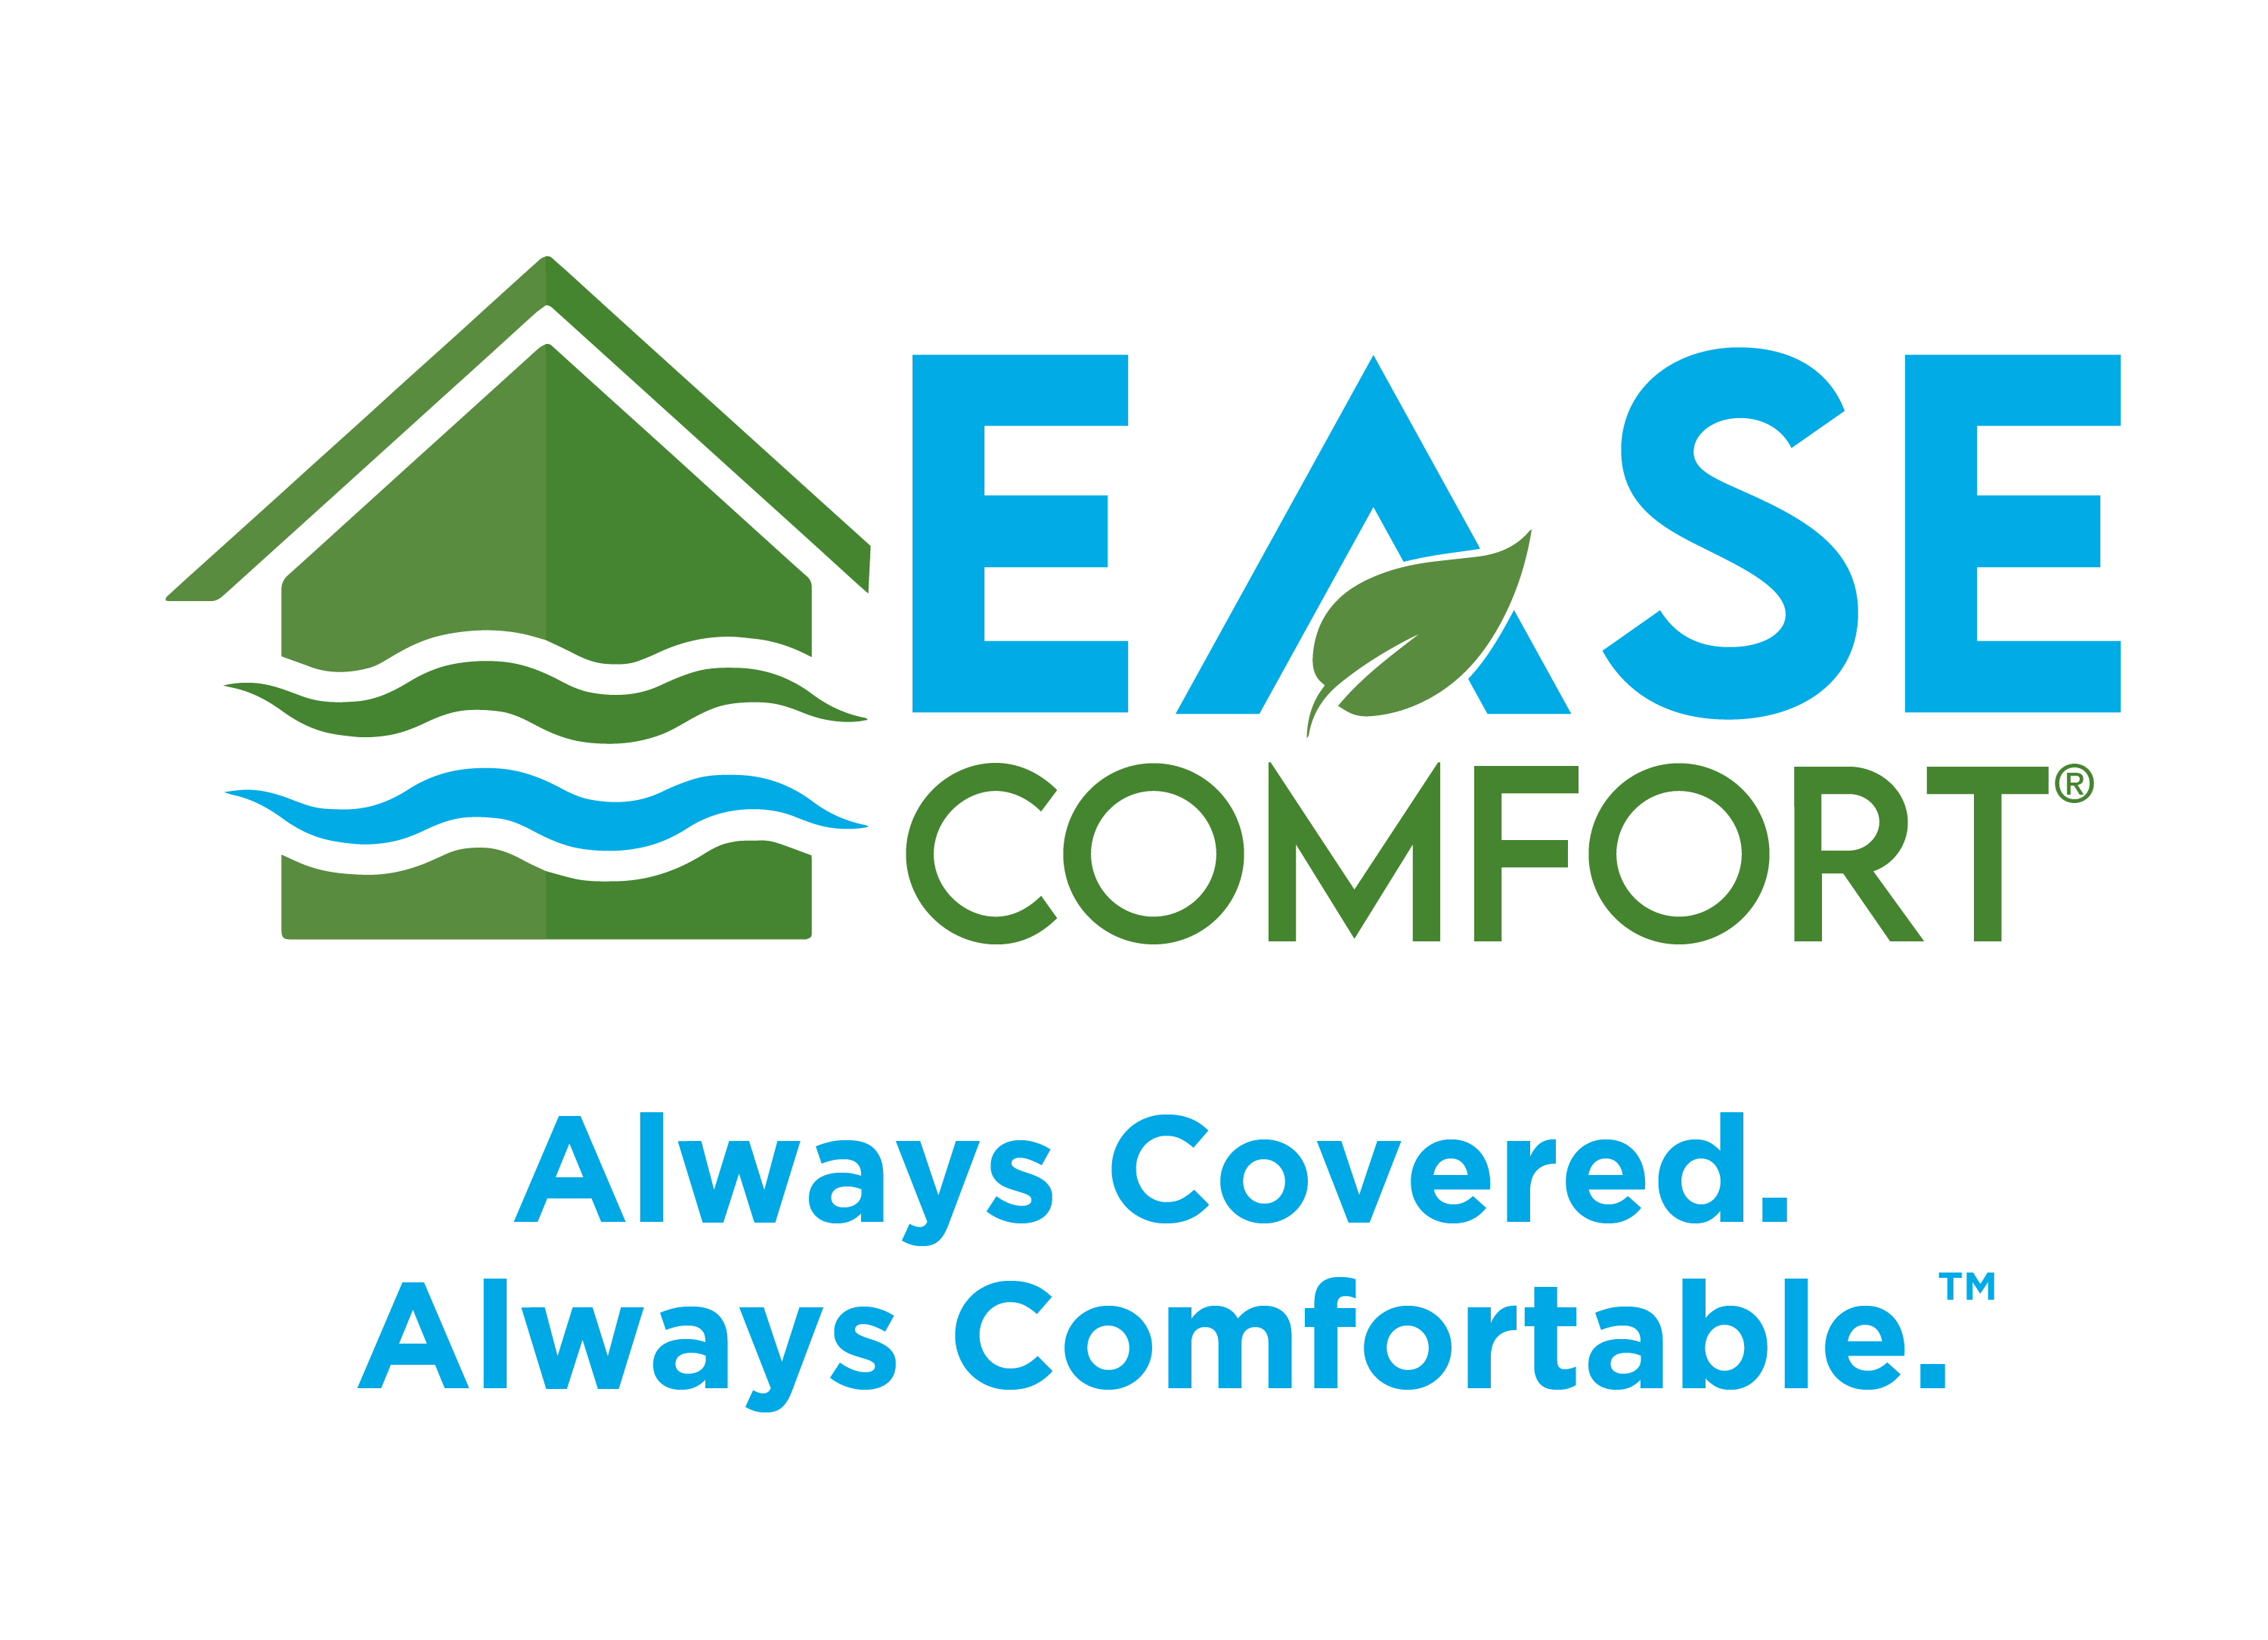 EASE Comfort - Always Covered. Always Comfortable.